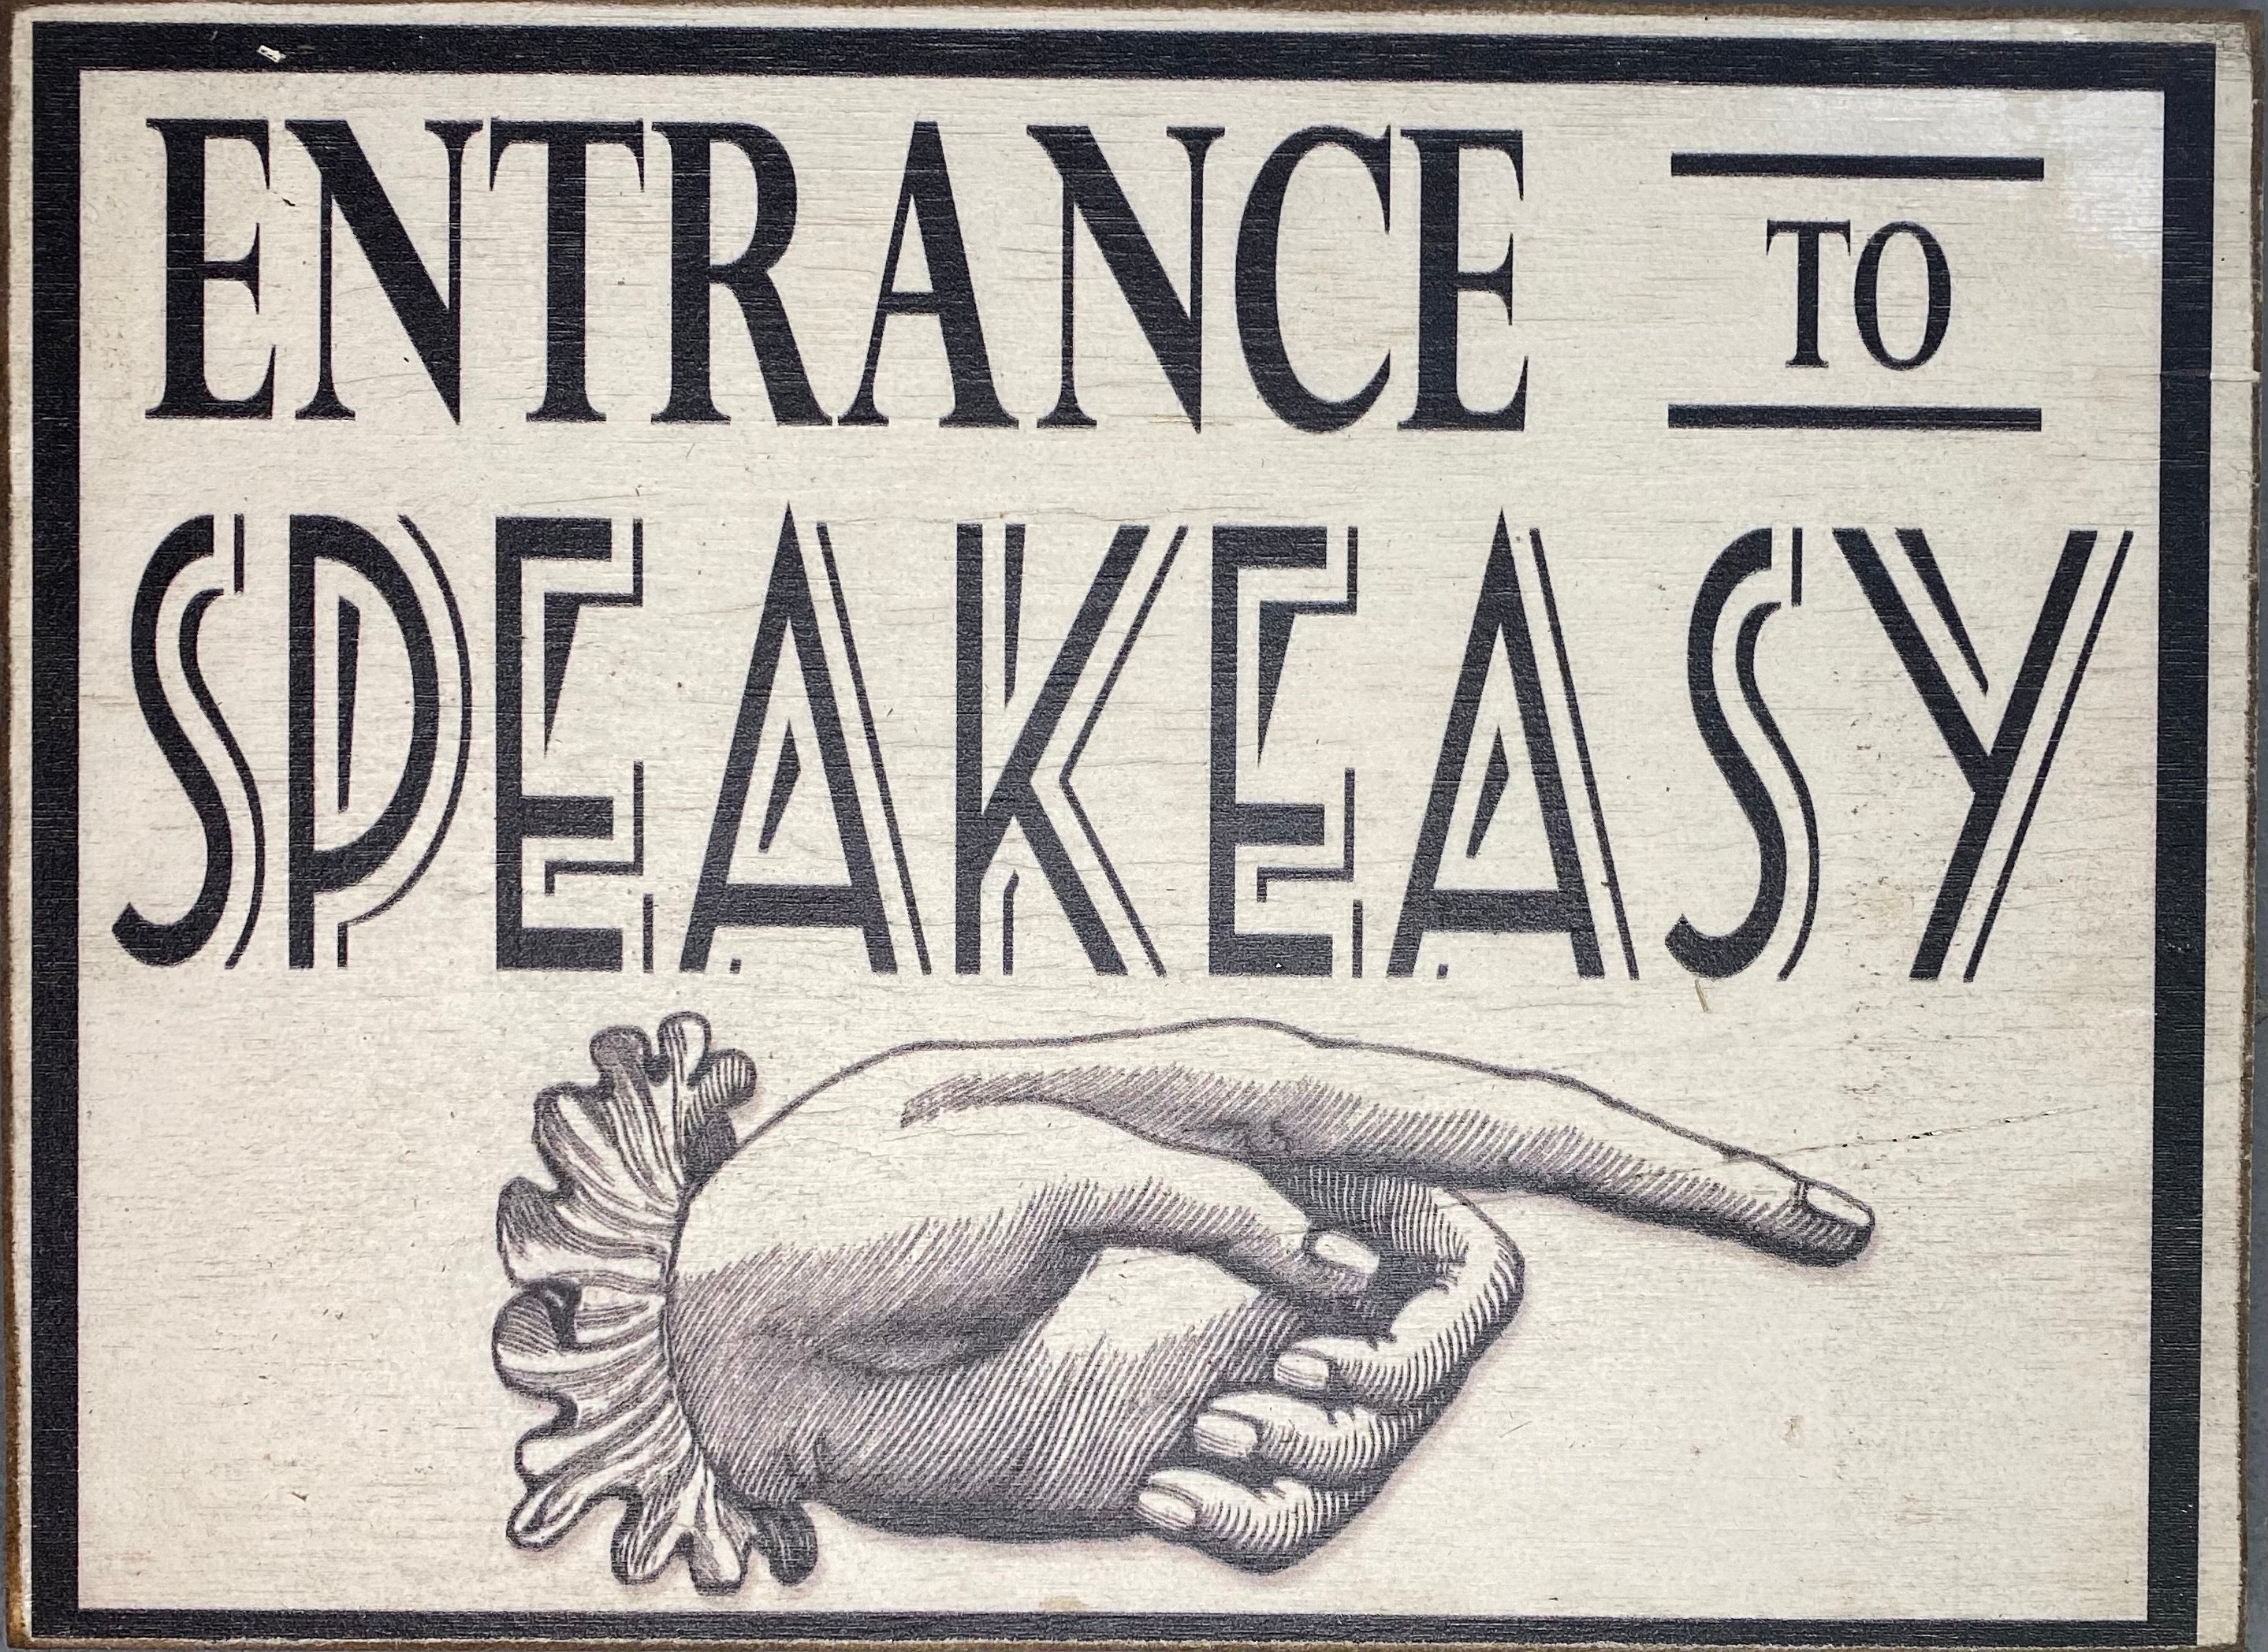 Entrance to Speakeasy